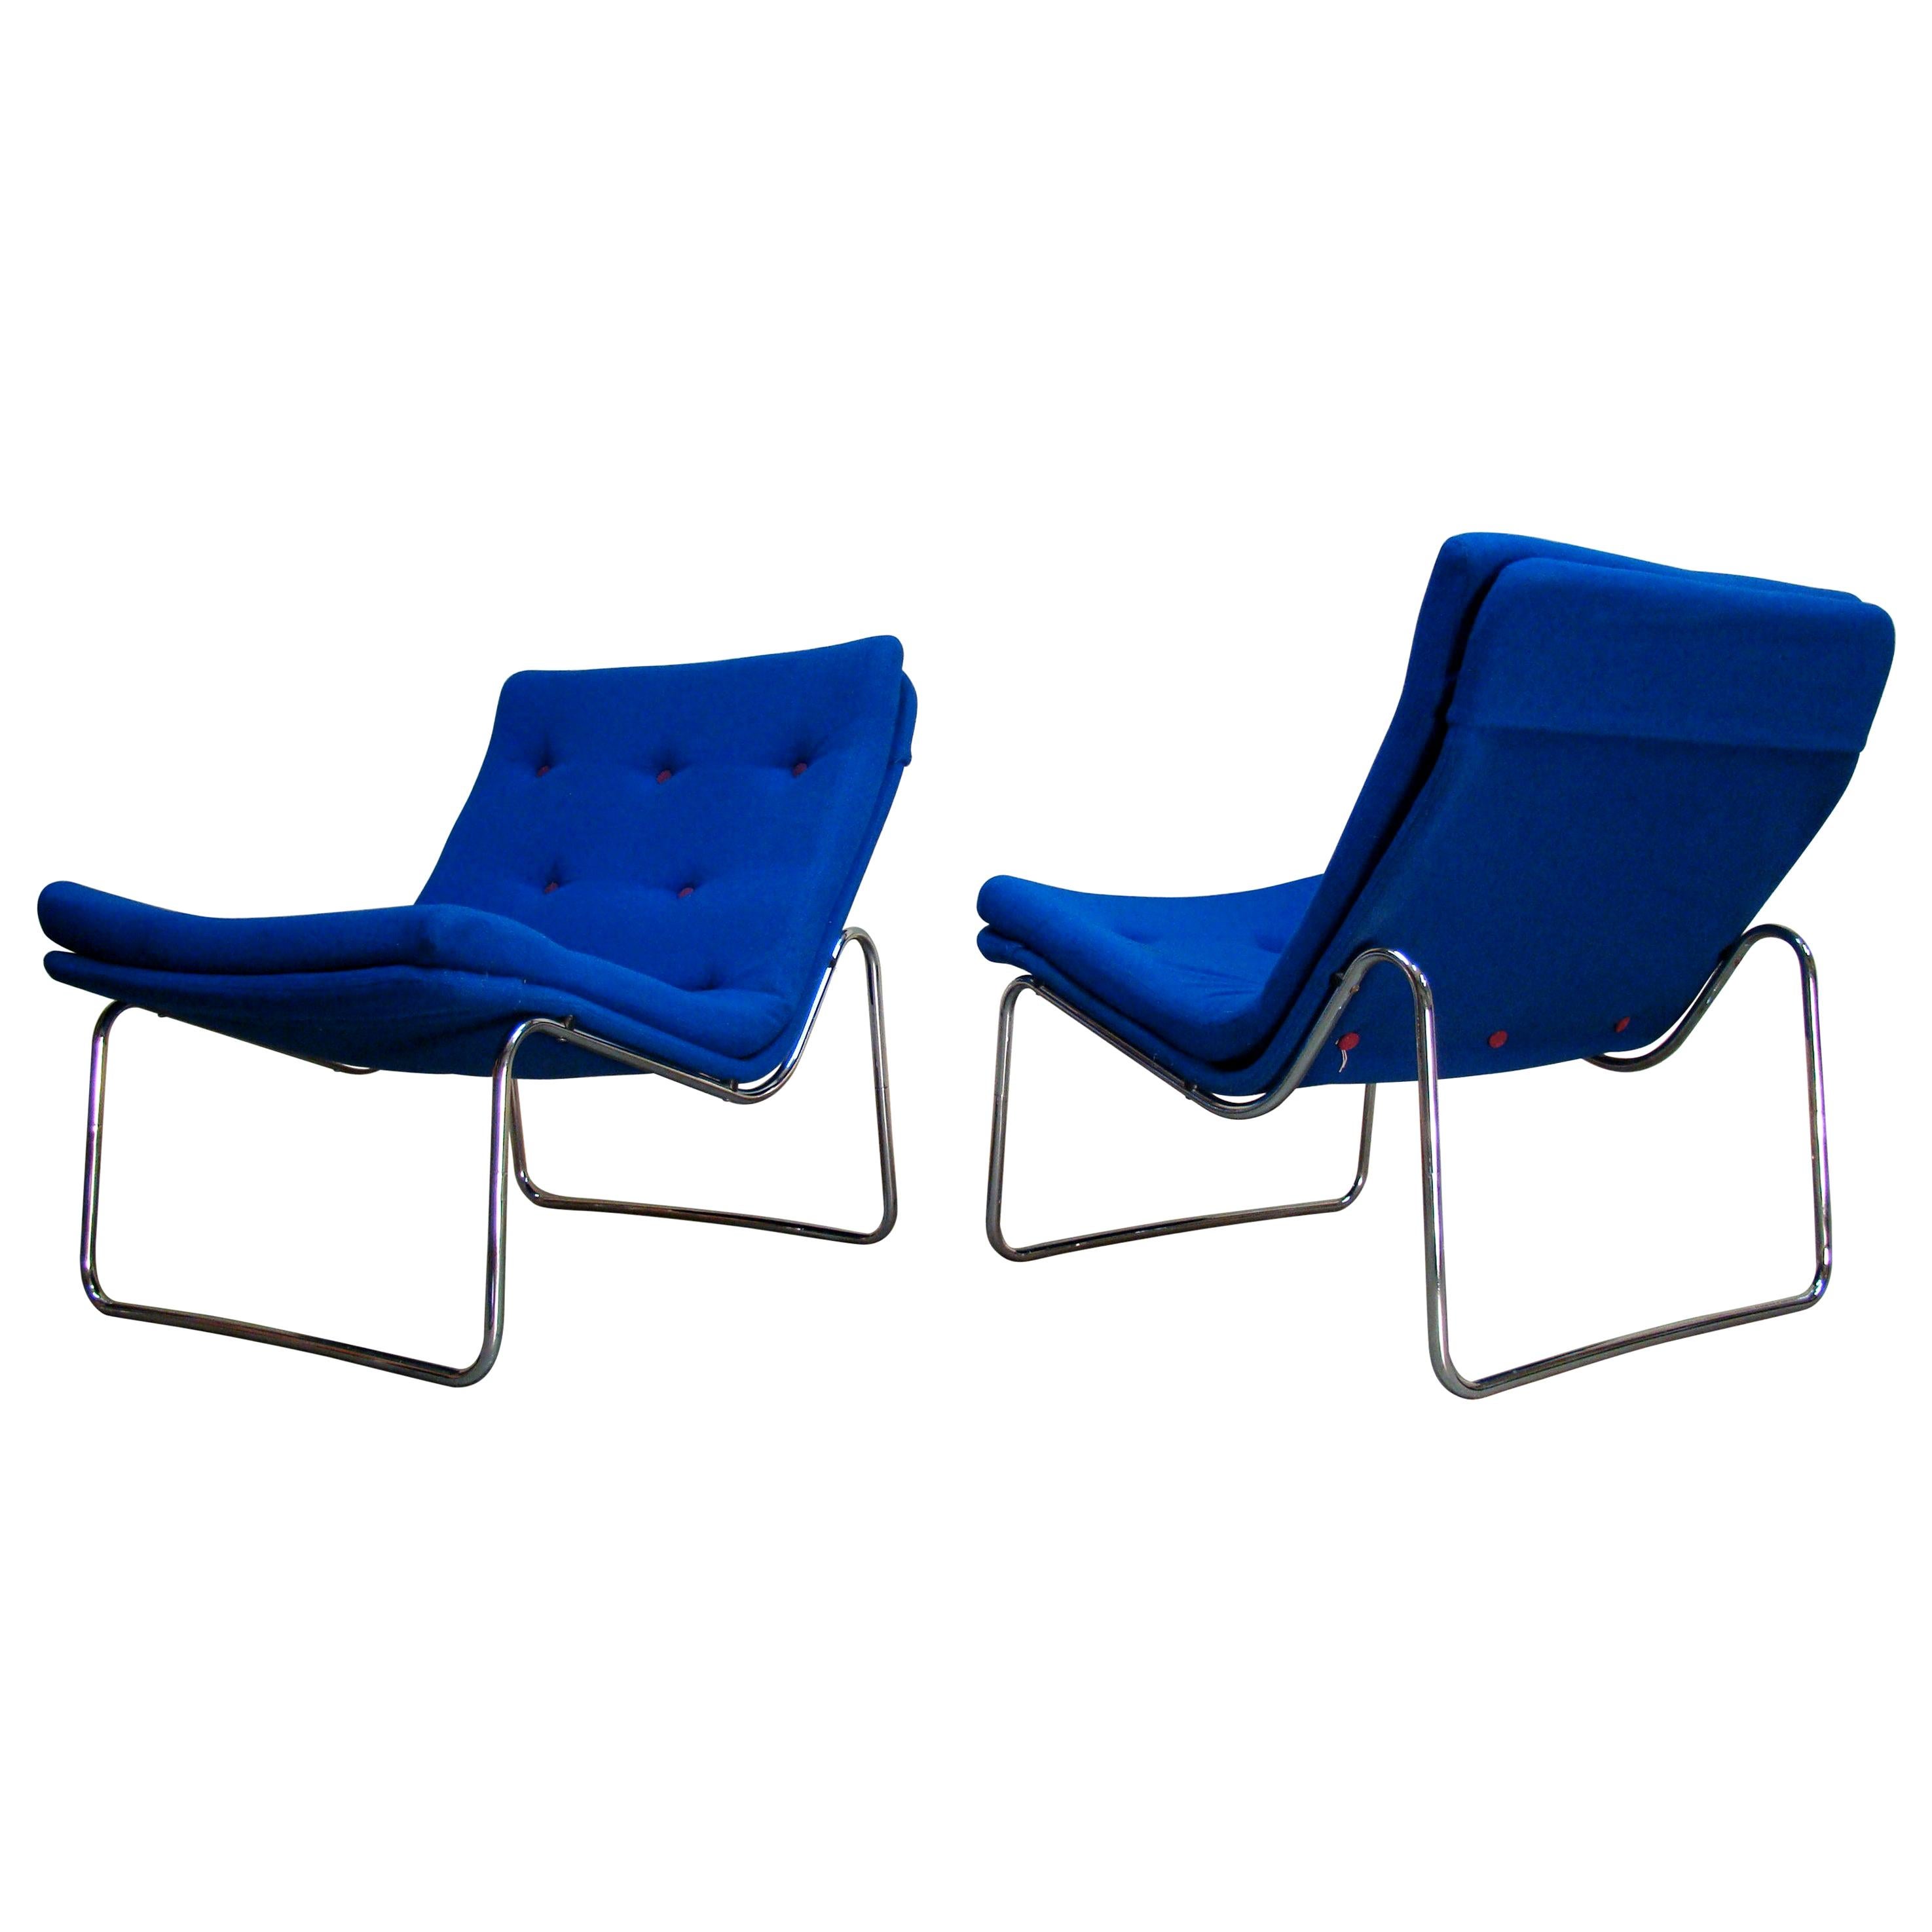 1960s Danish Pair of Fluid Chrome Lounge Chairs in Copenhagen Blue Wool